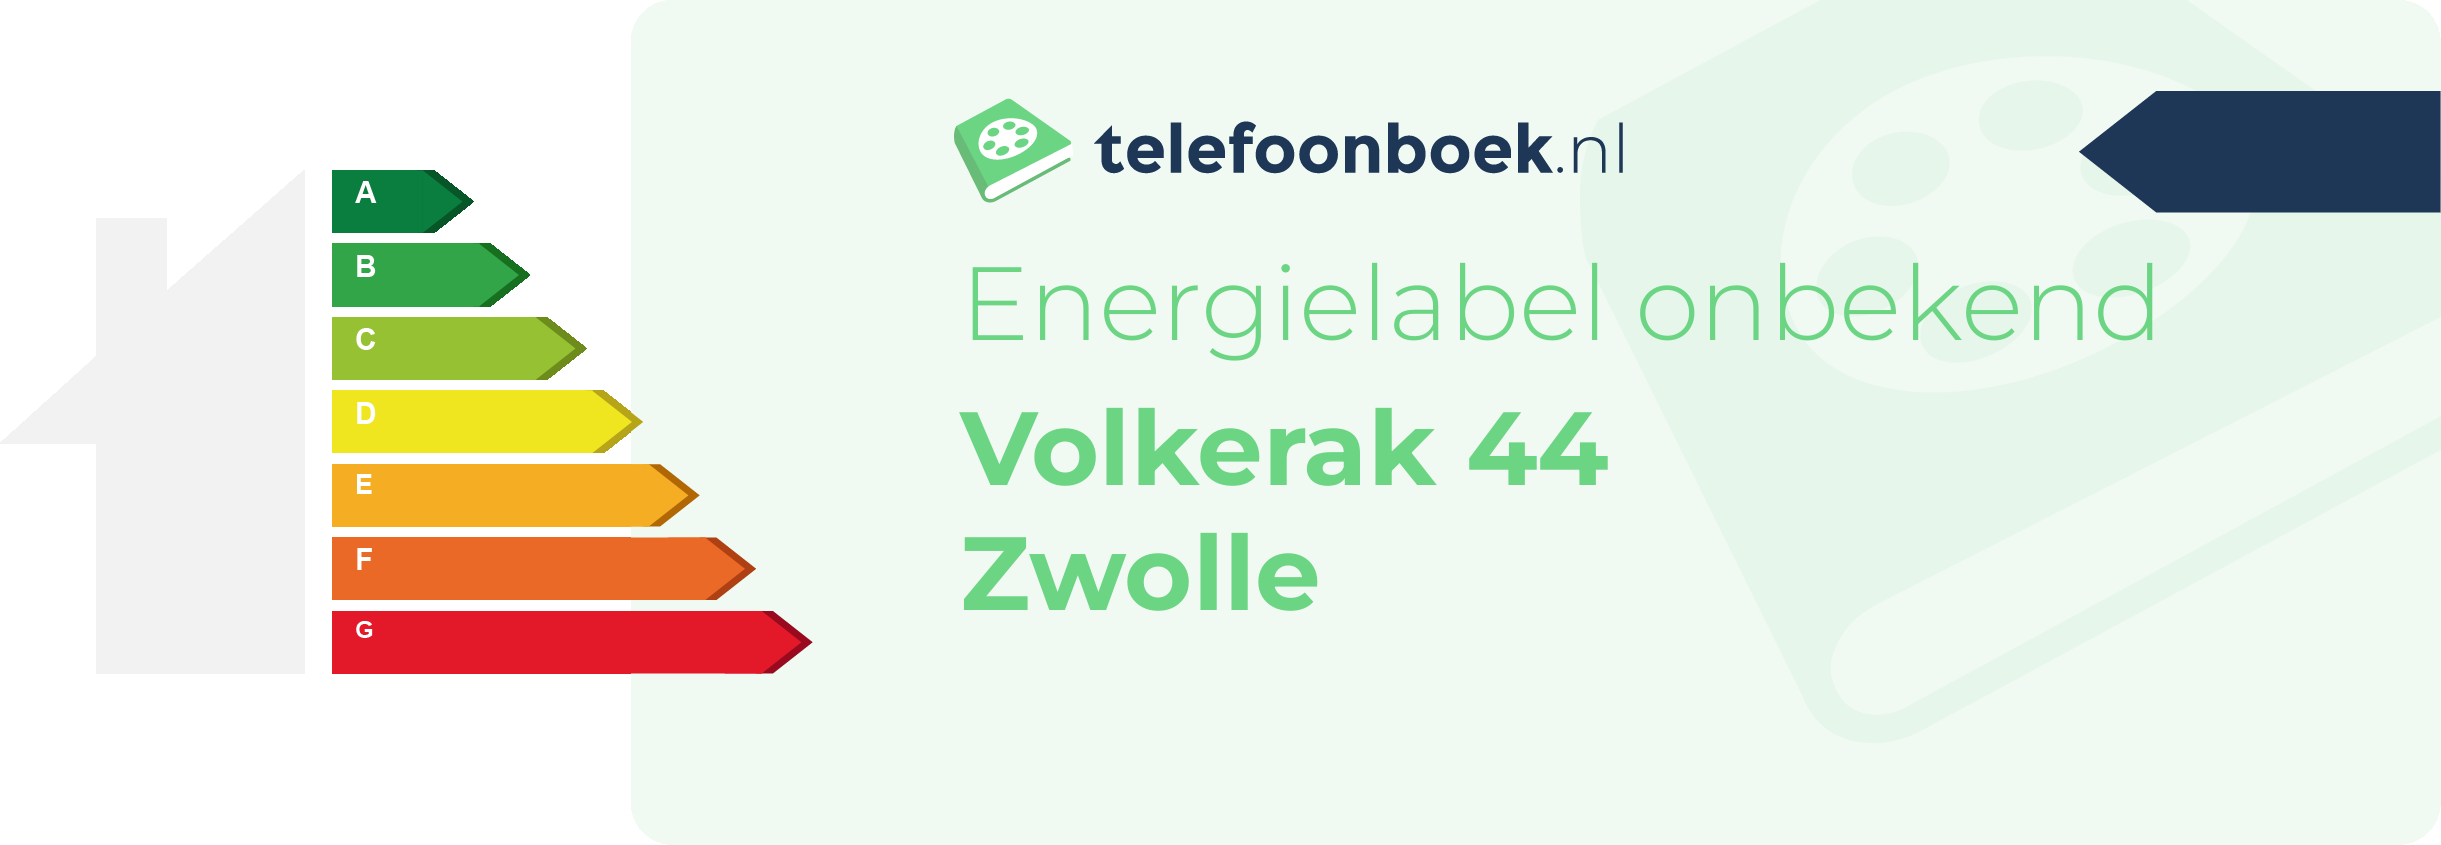 Energielabel Volkerak 44 Zwolle